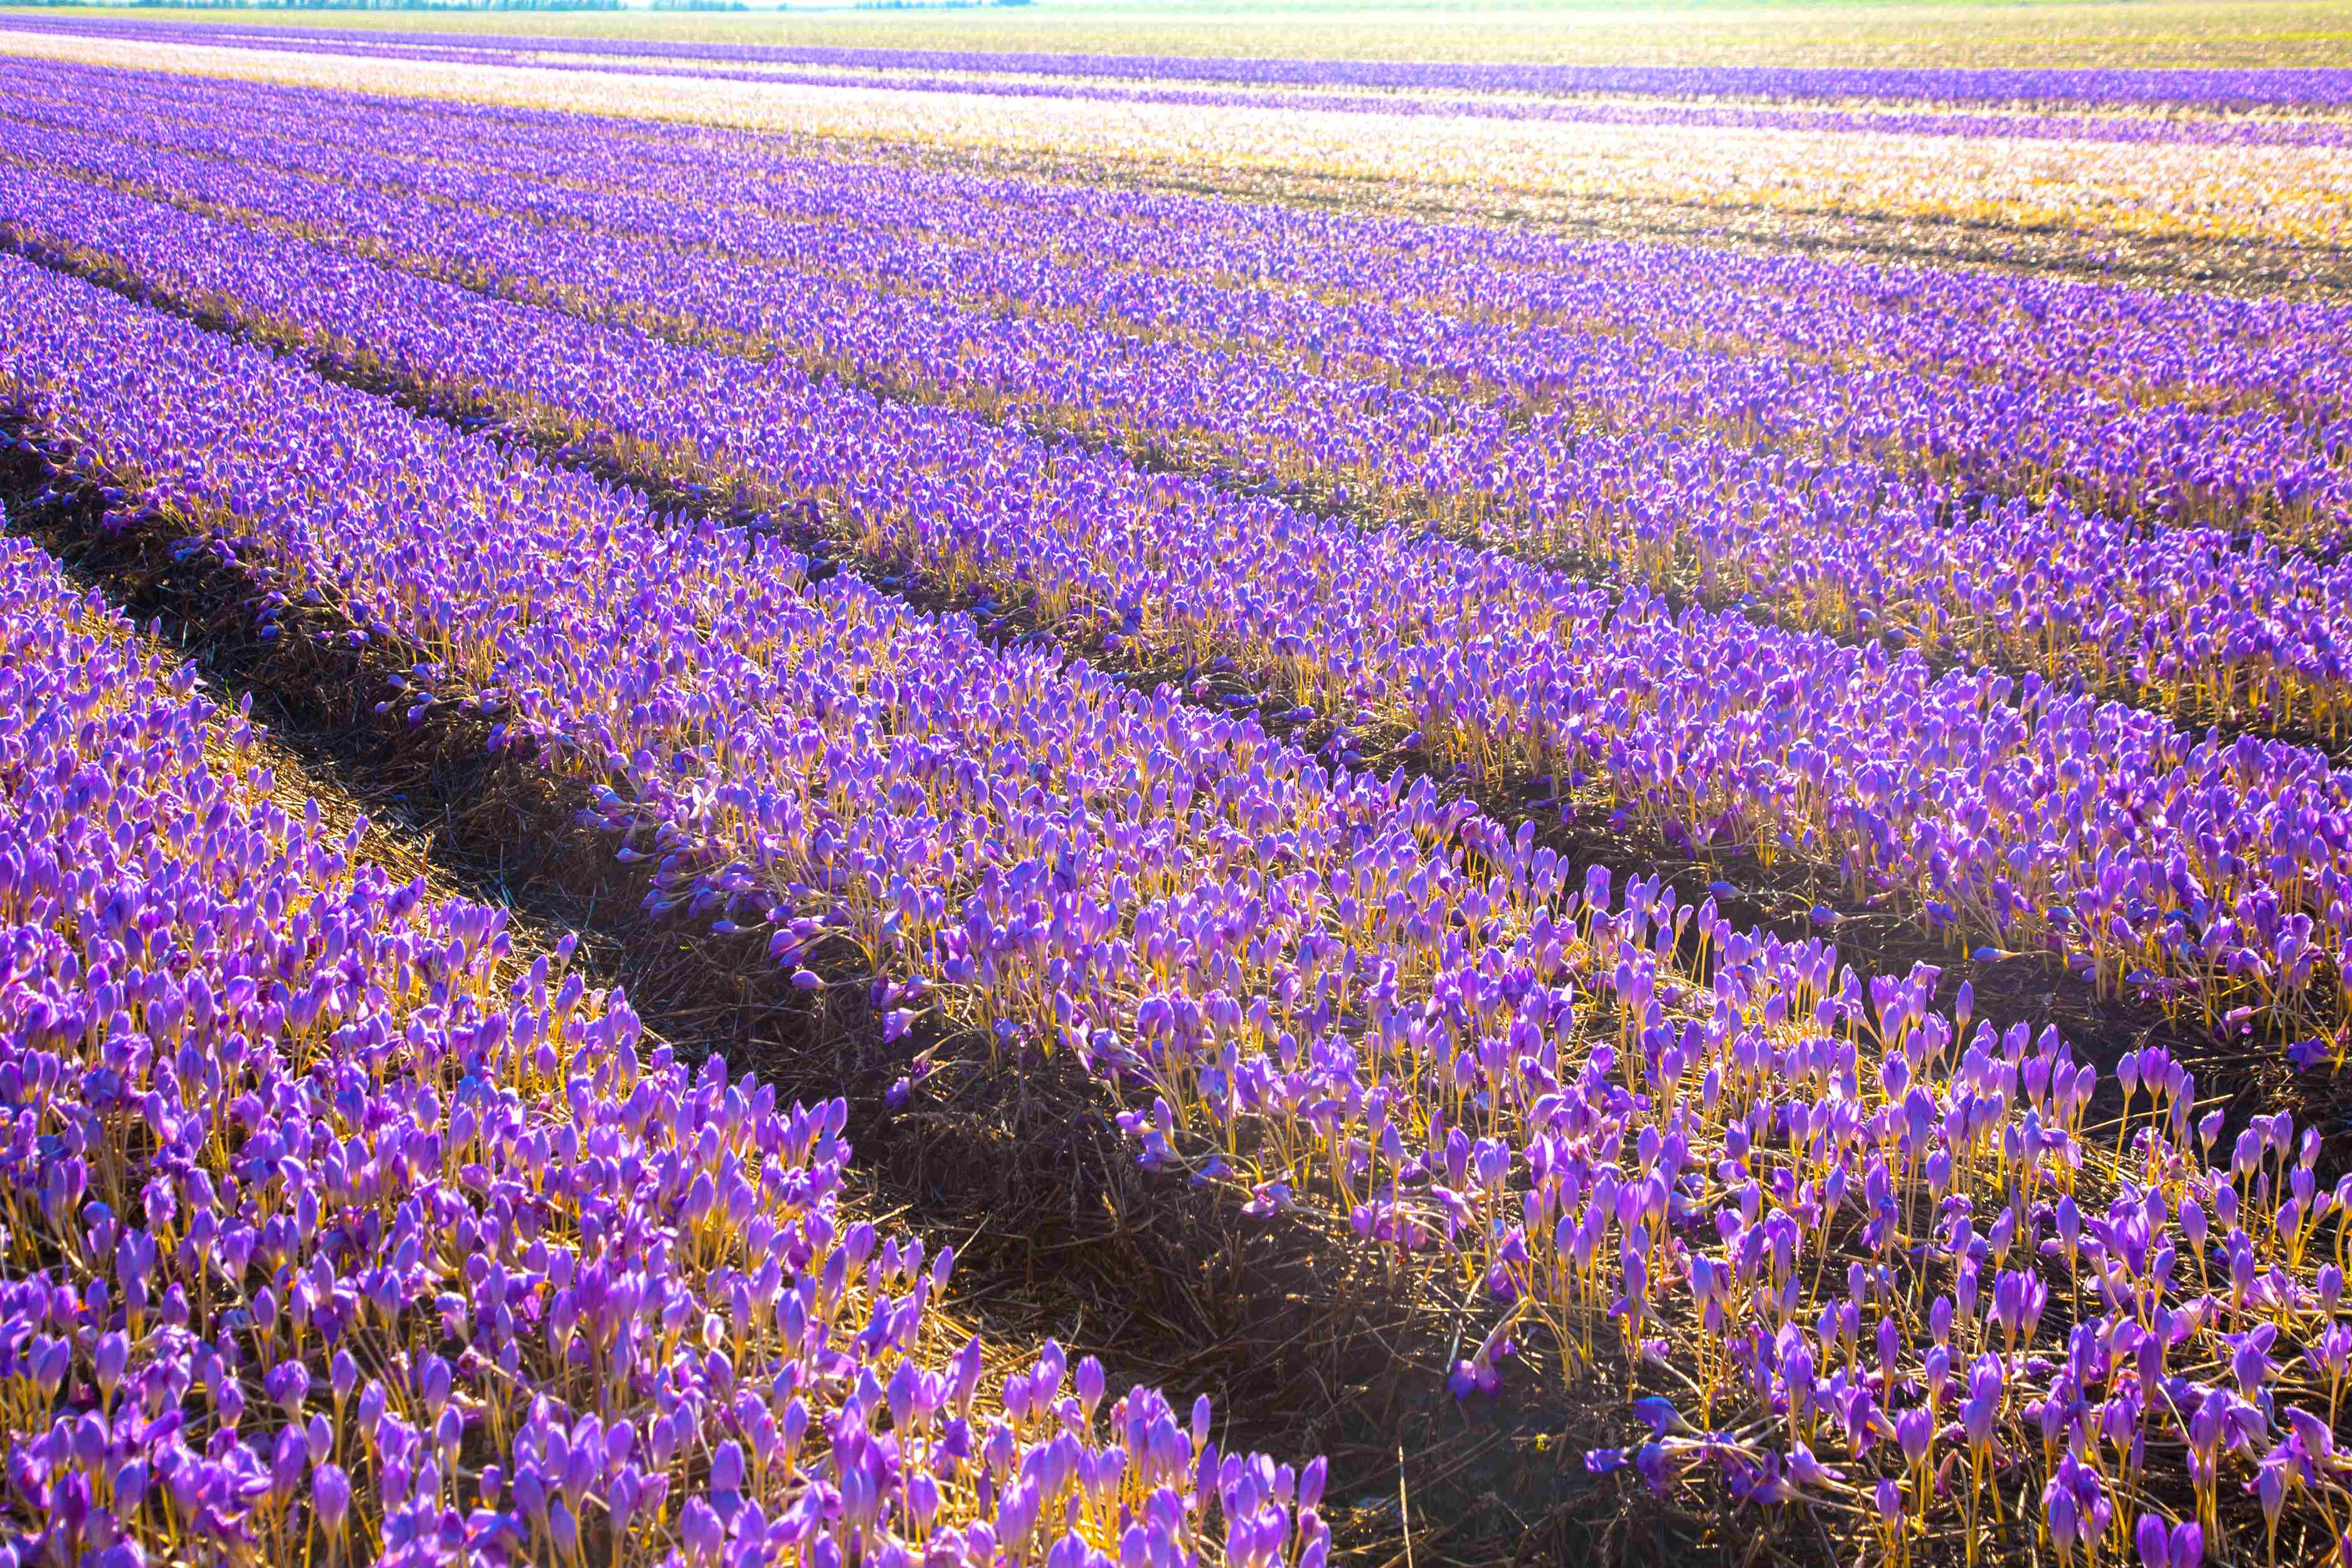 Picture of saffron fields